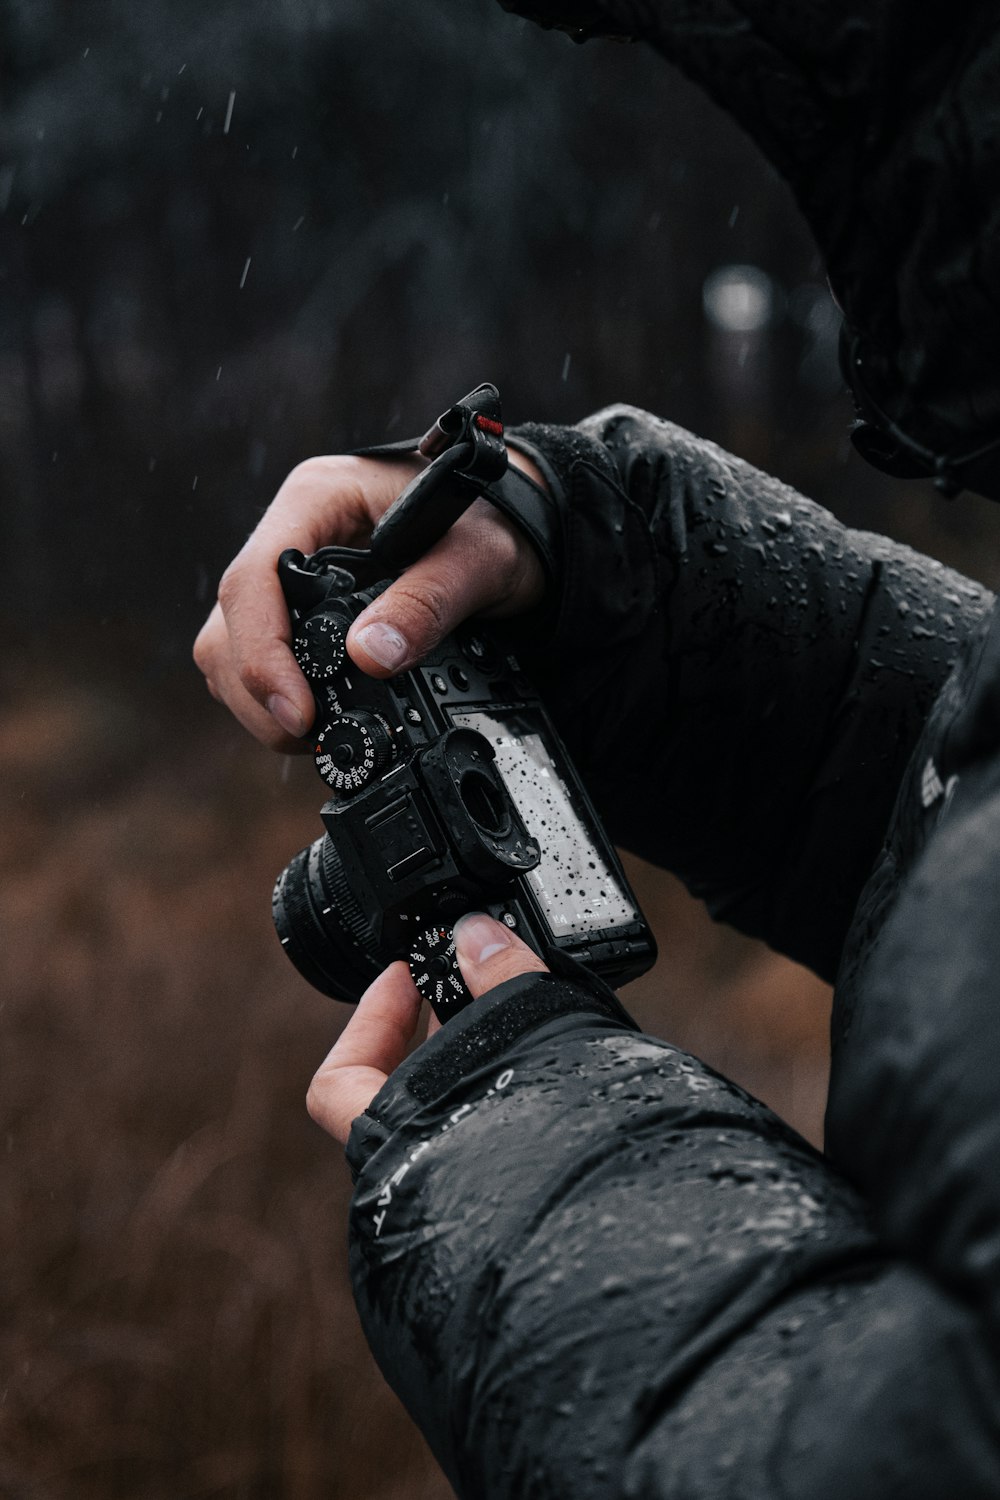 a person holding a camera in the rain